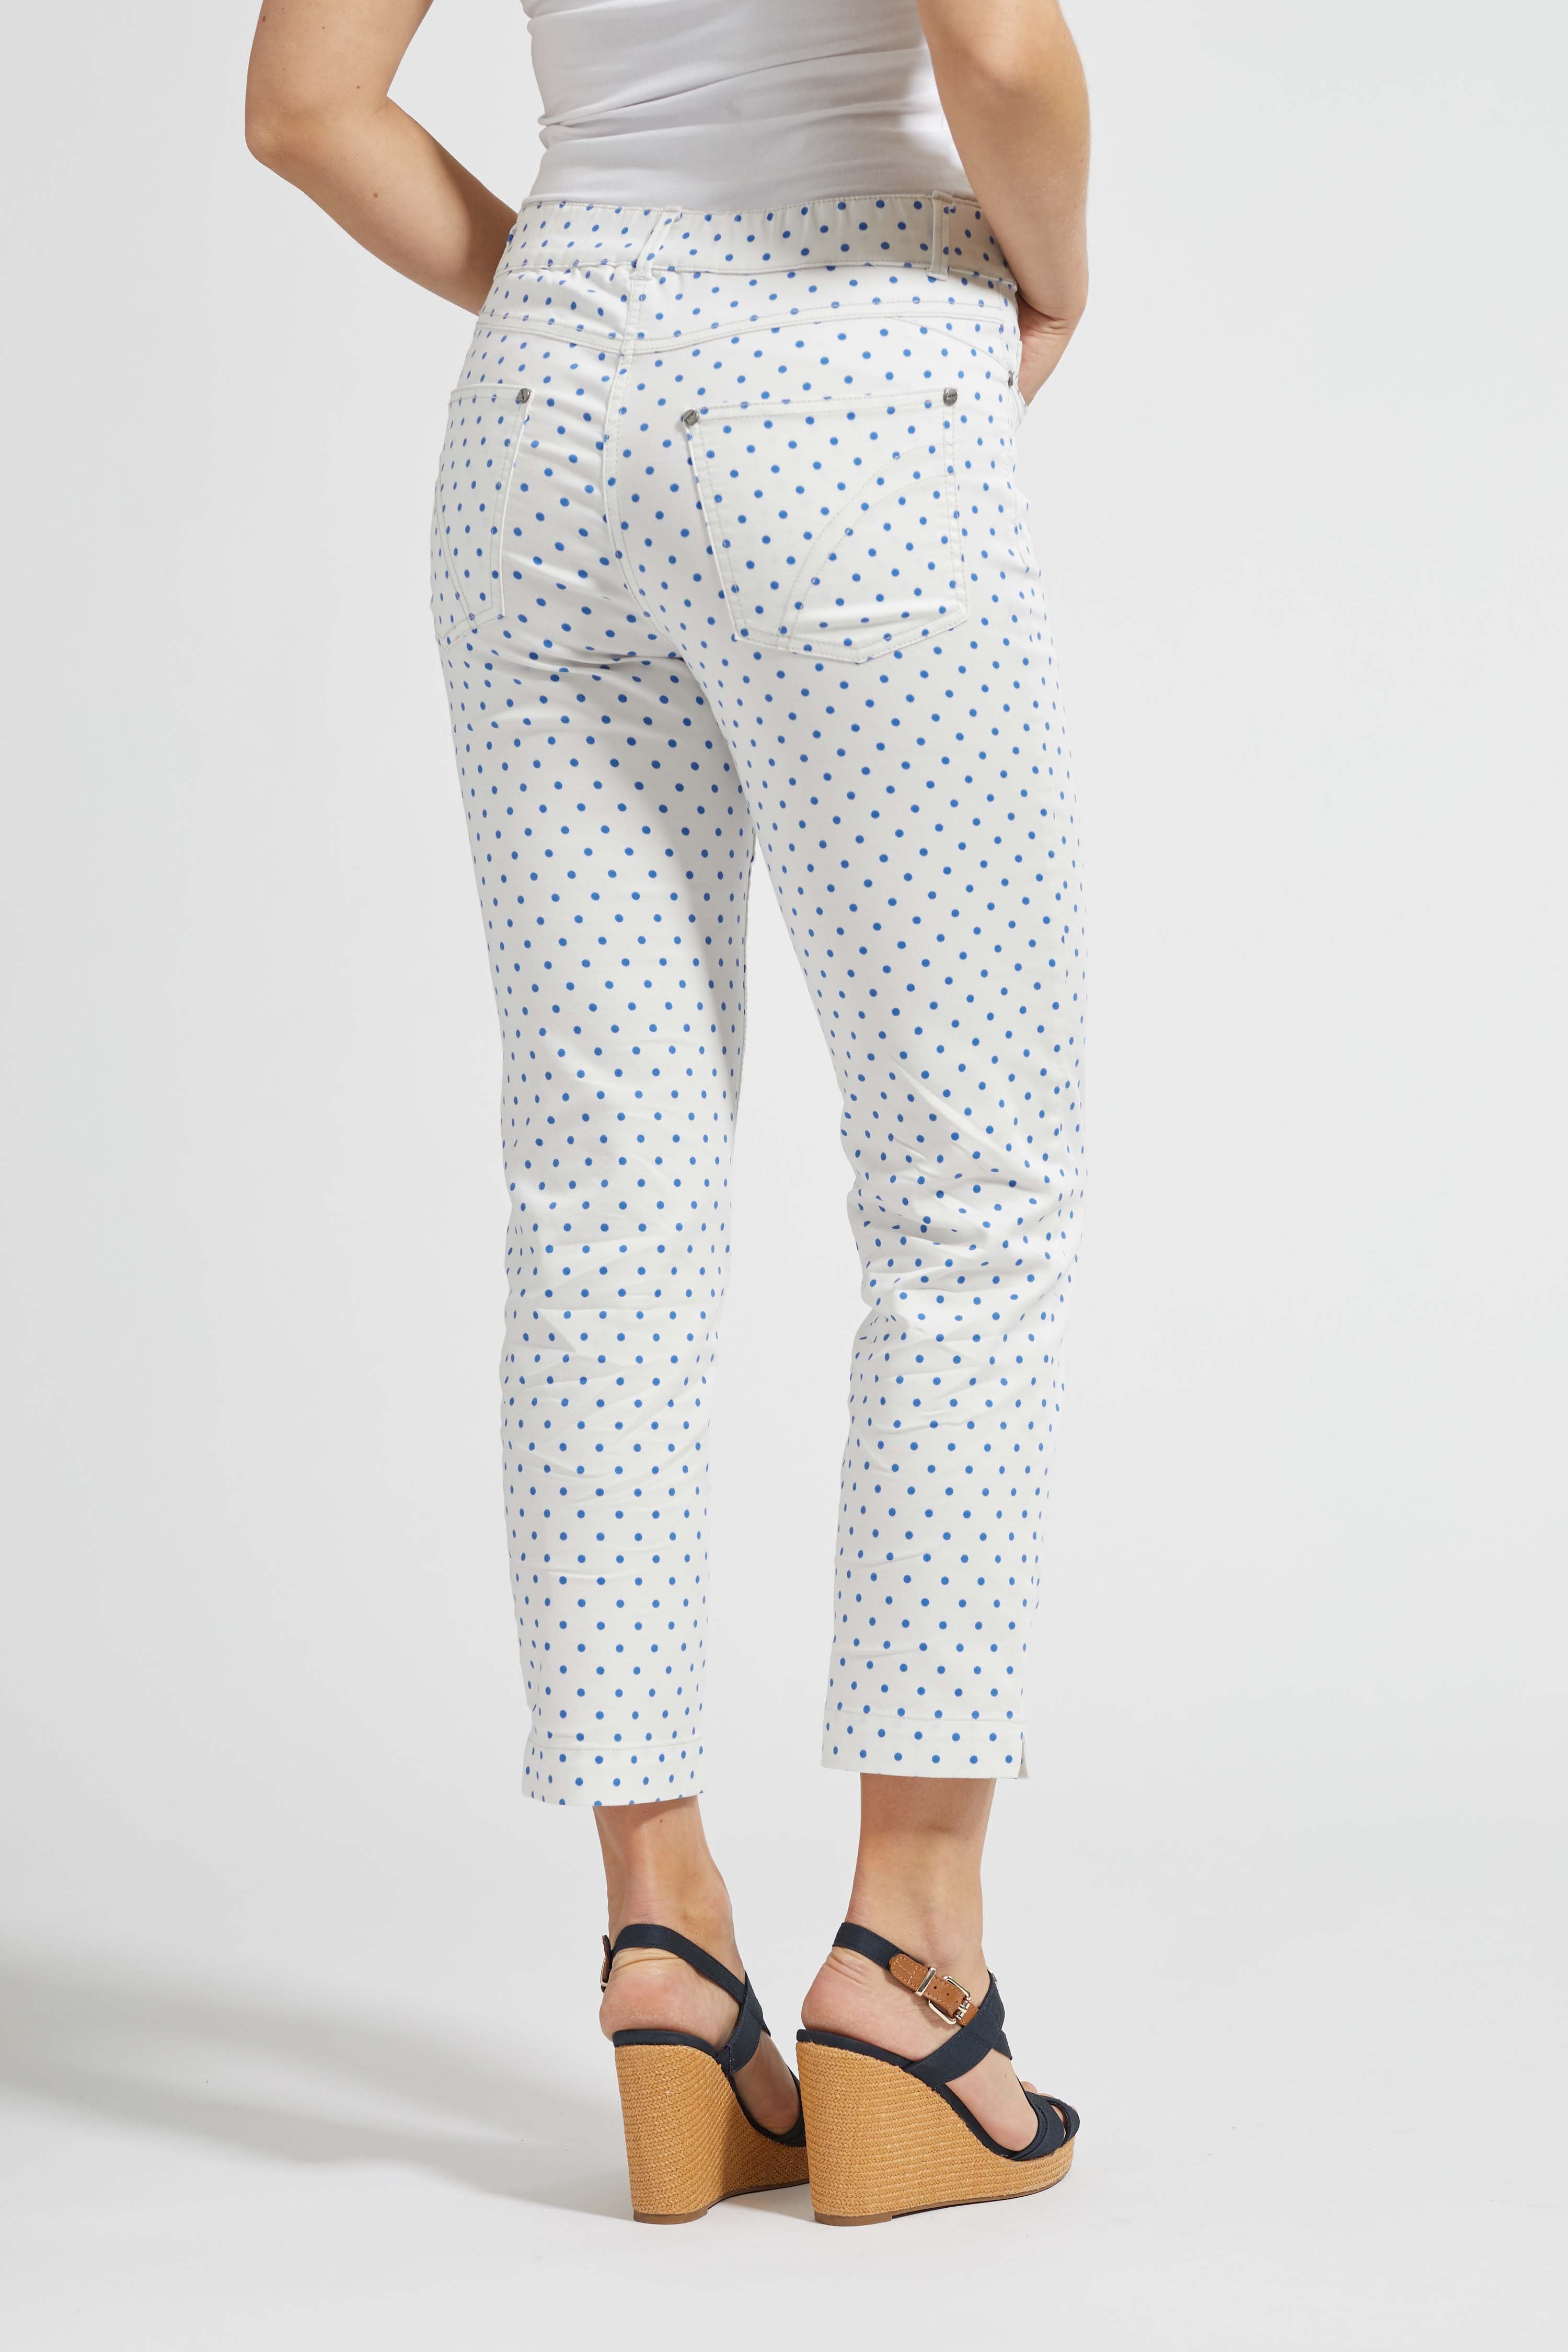 LAURIE  Hannah Regular - Extra Short Length Trousers REGULAR 45402 Strong Blue Dots